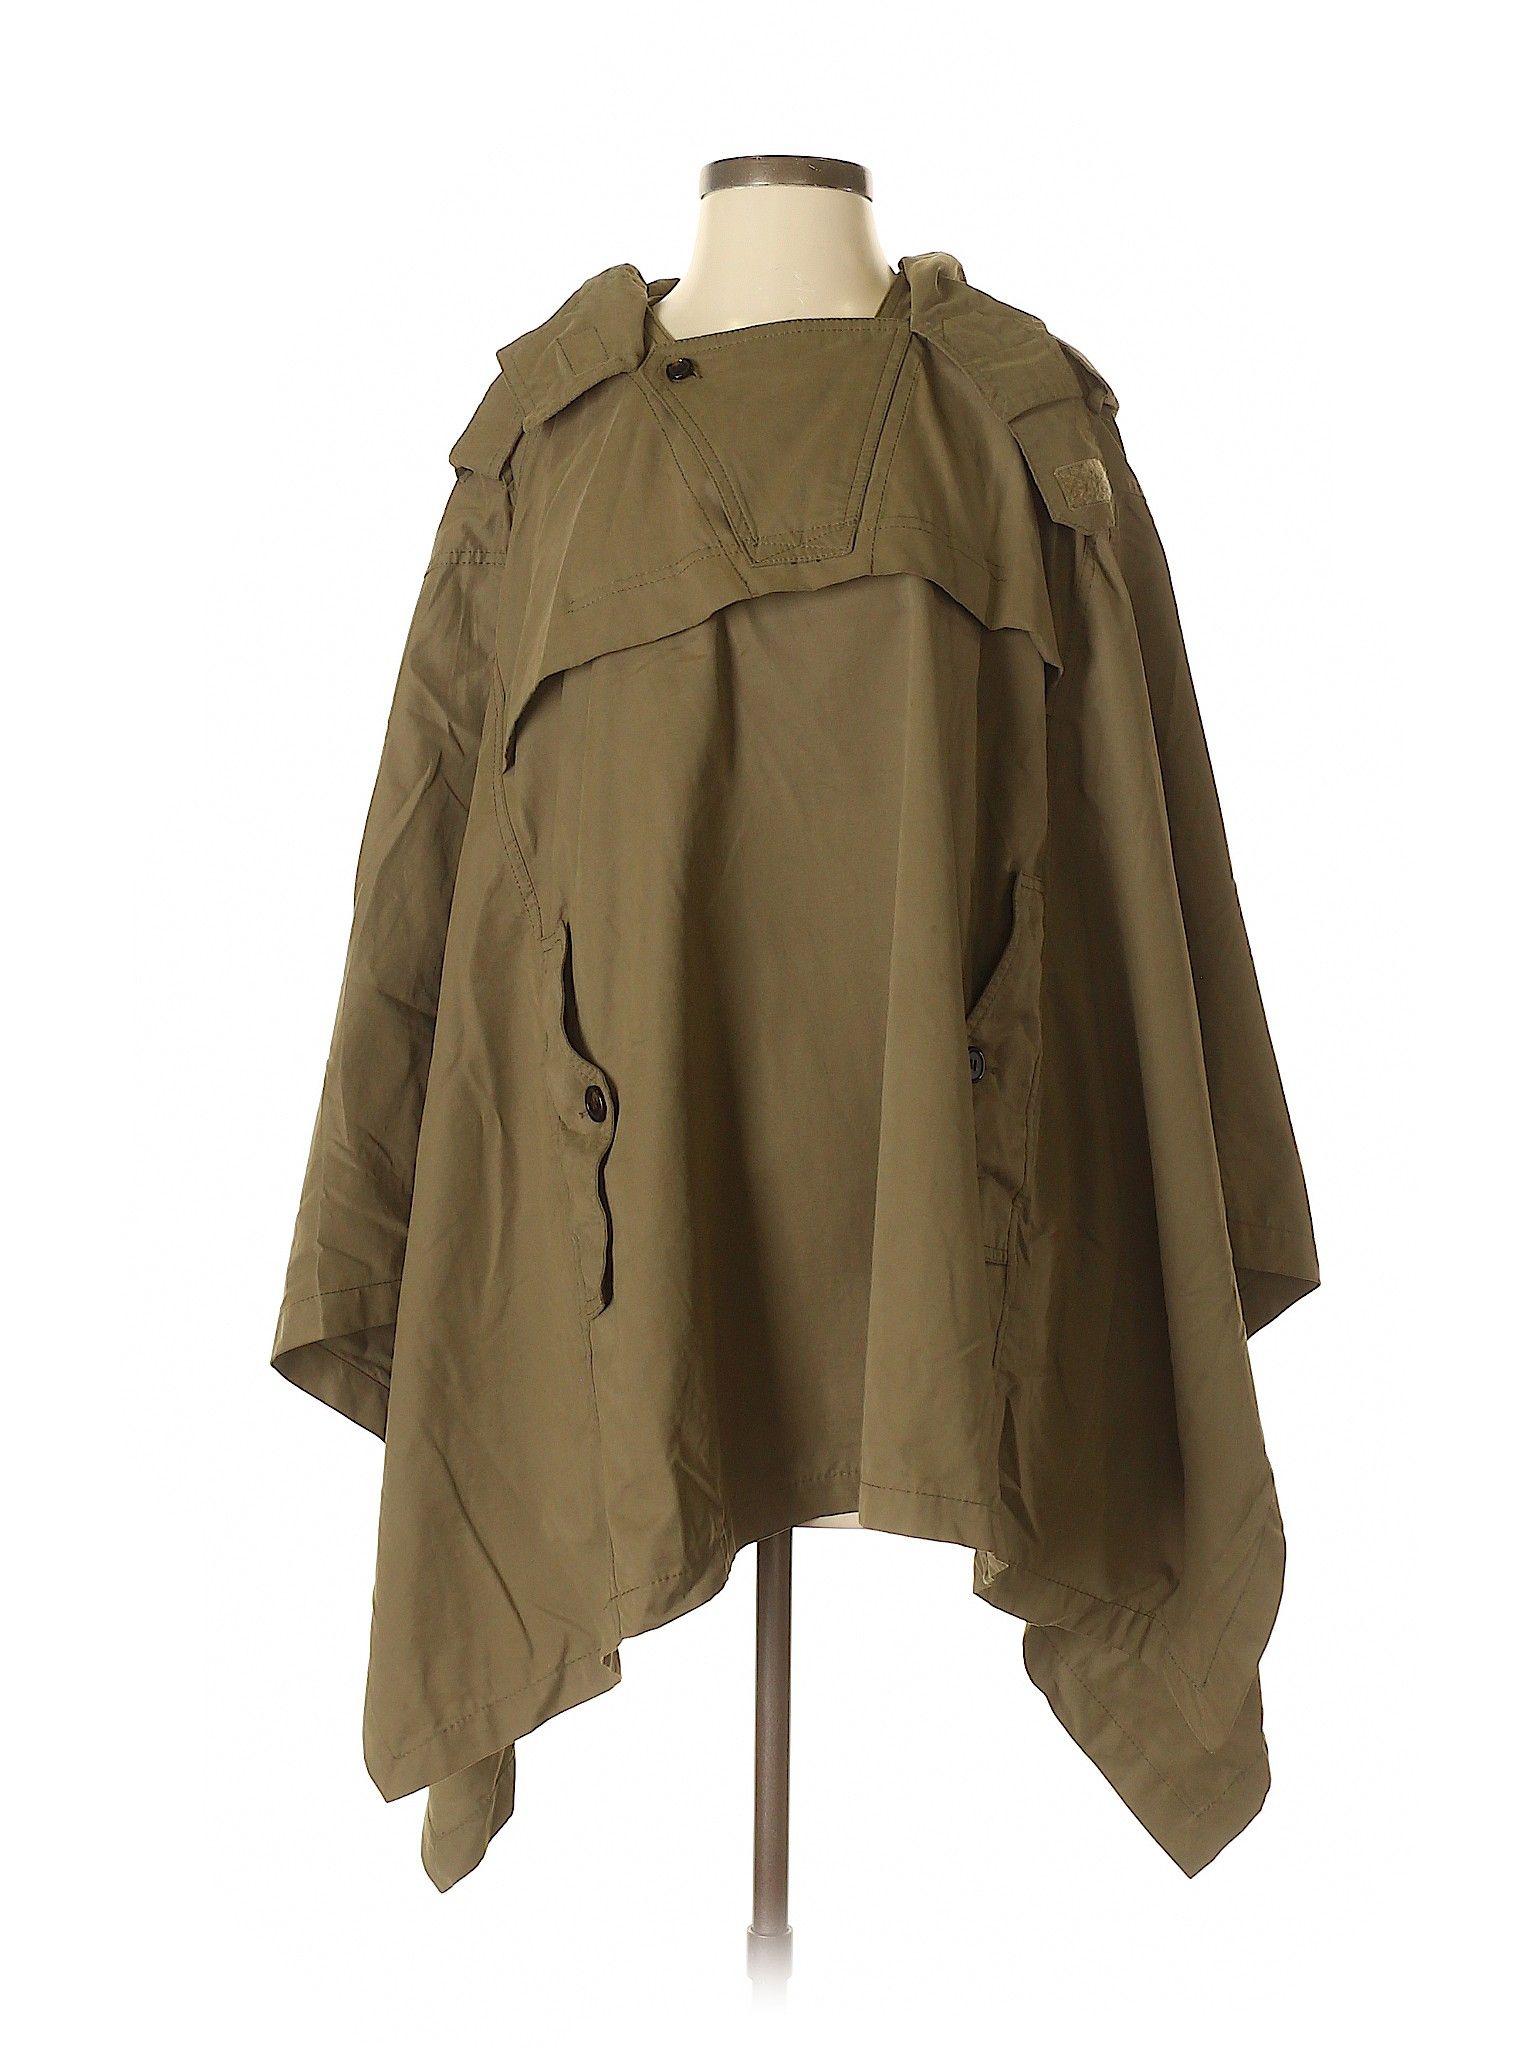 Zara Jacket Size 8: Tan Women's Jackets & Outerwear - 42048989 | thredUP